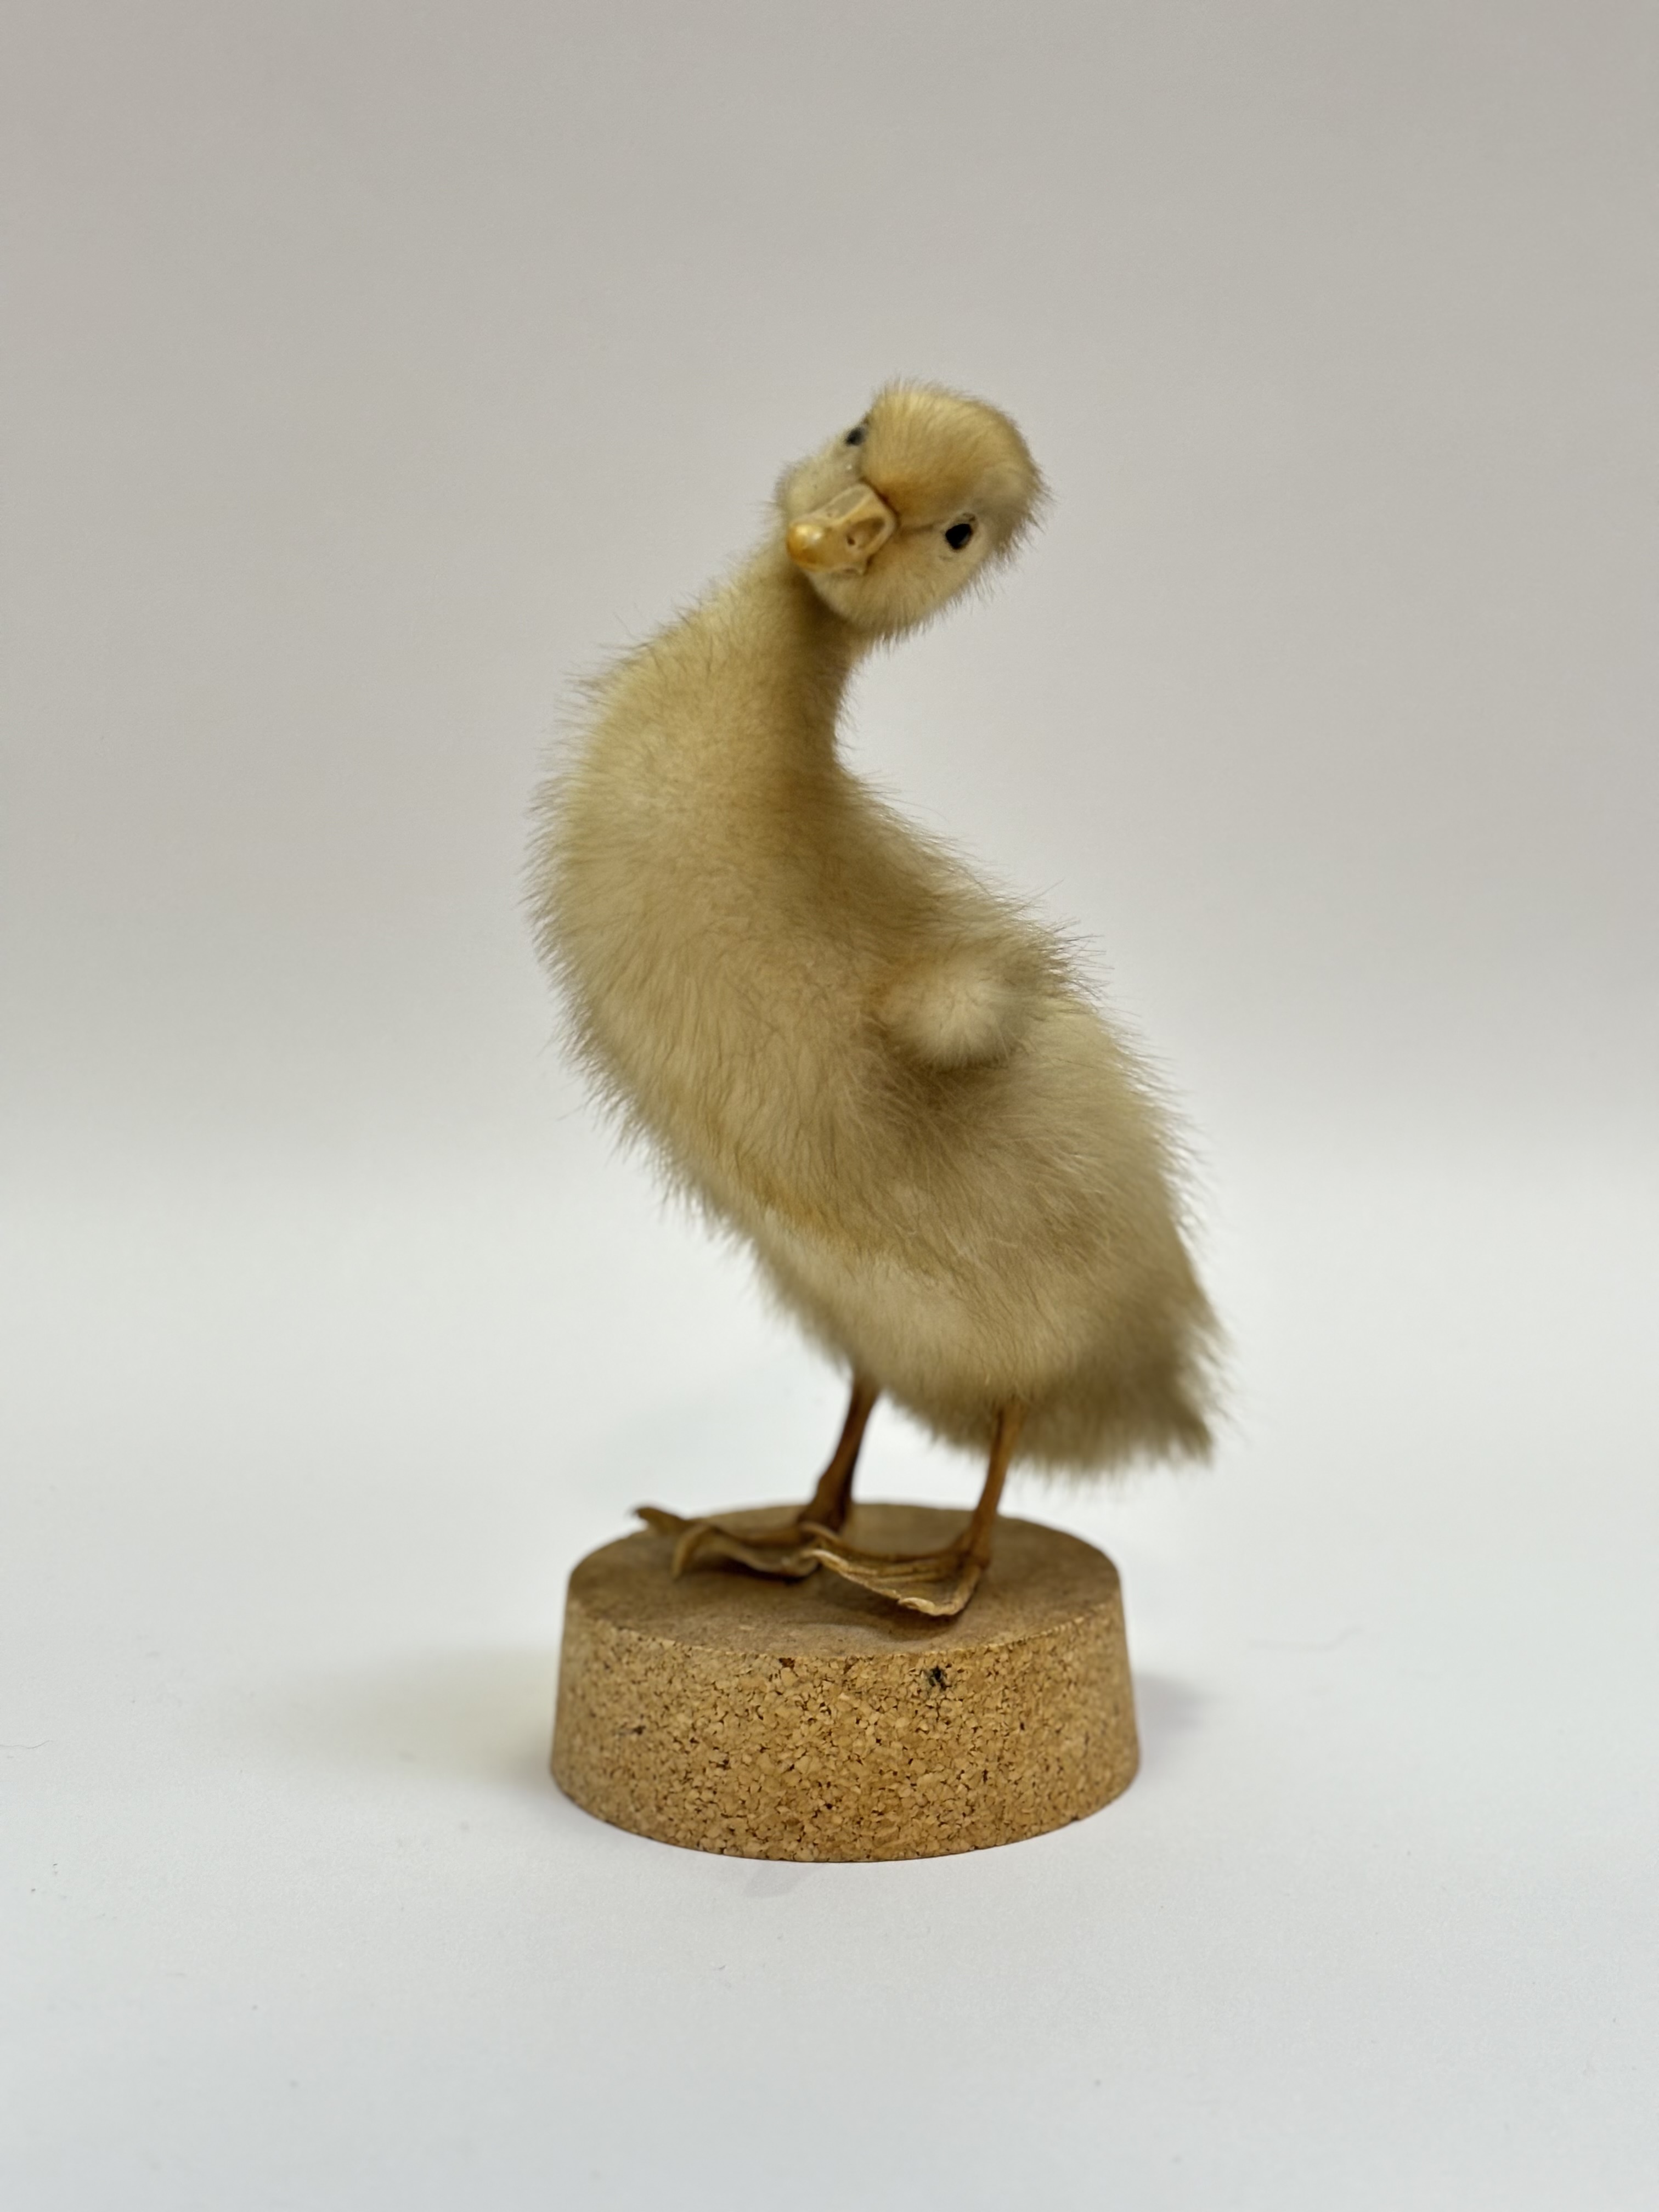 Taxidermy - A fluffy yellow duckling raised on a cork based. (duckling h-23cm)